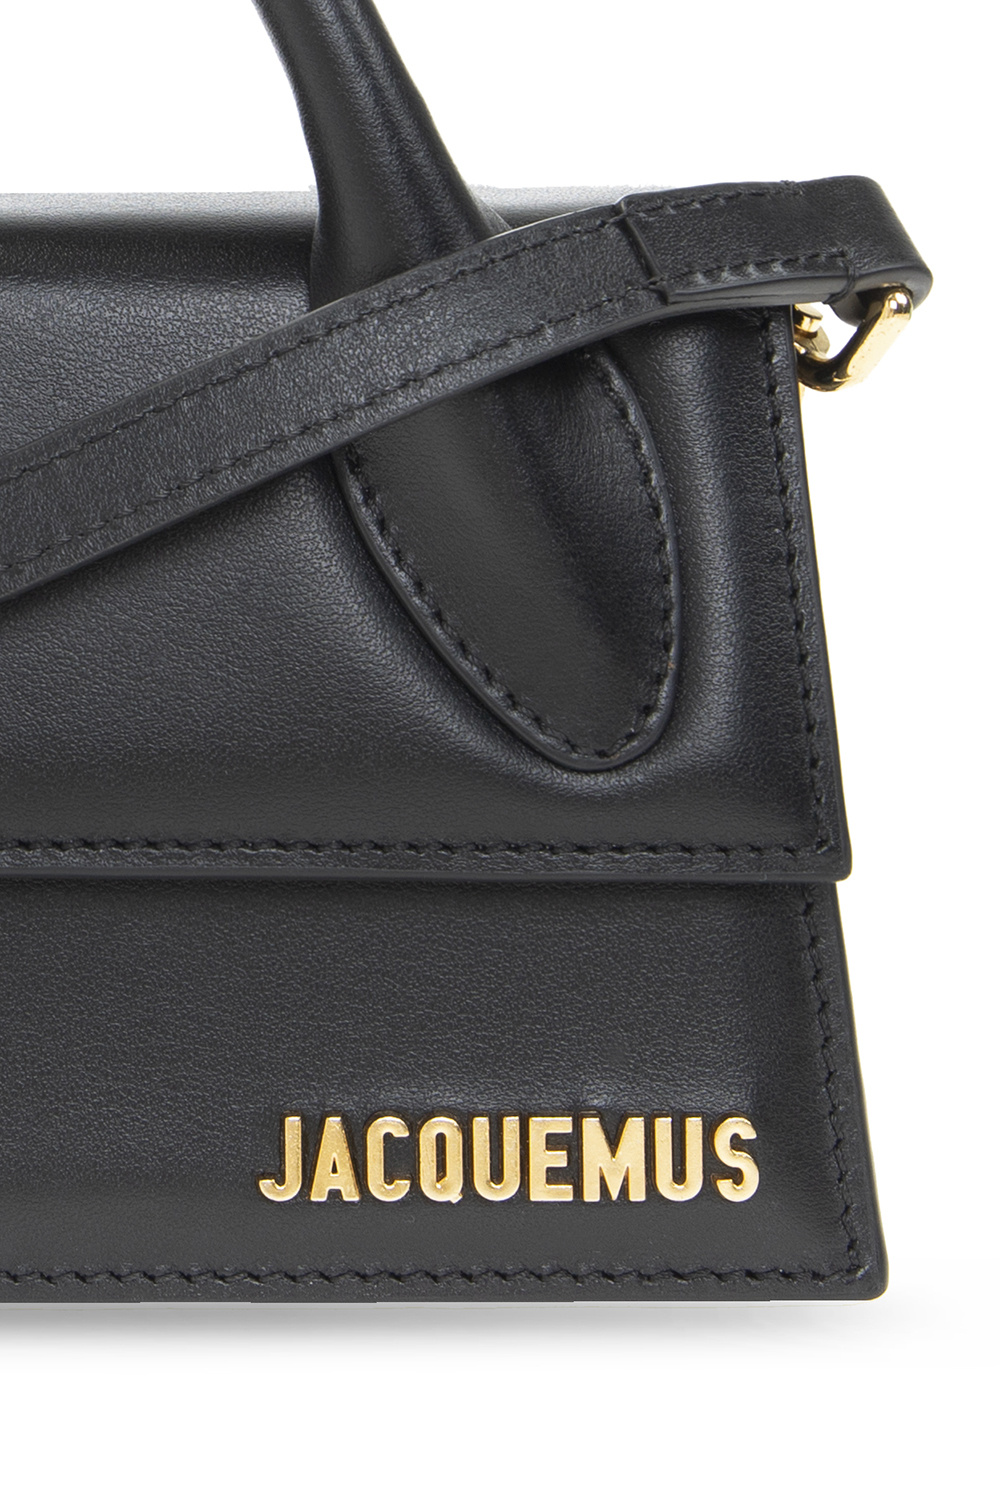 Jacquemus Le Chiquito Long Black Leather Top Handle Bag, Bag